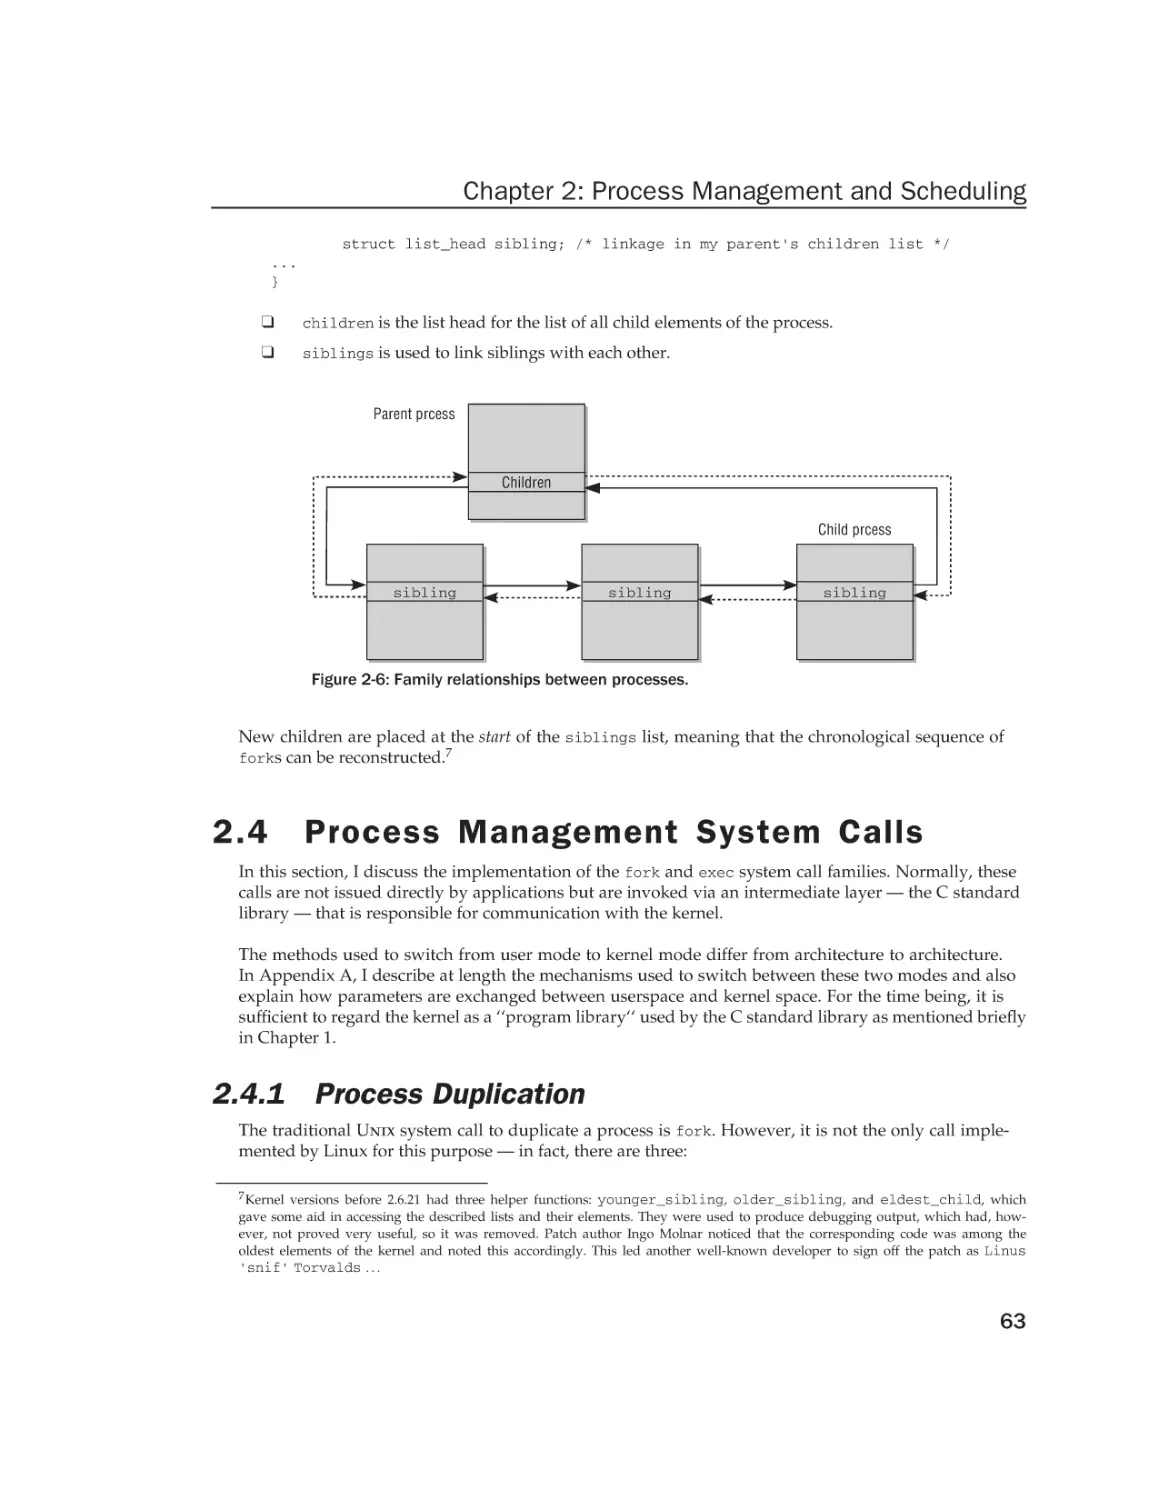 2.4 Process Management System Calls